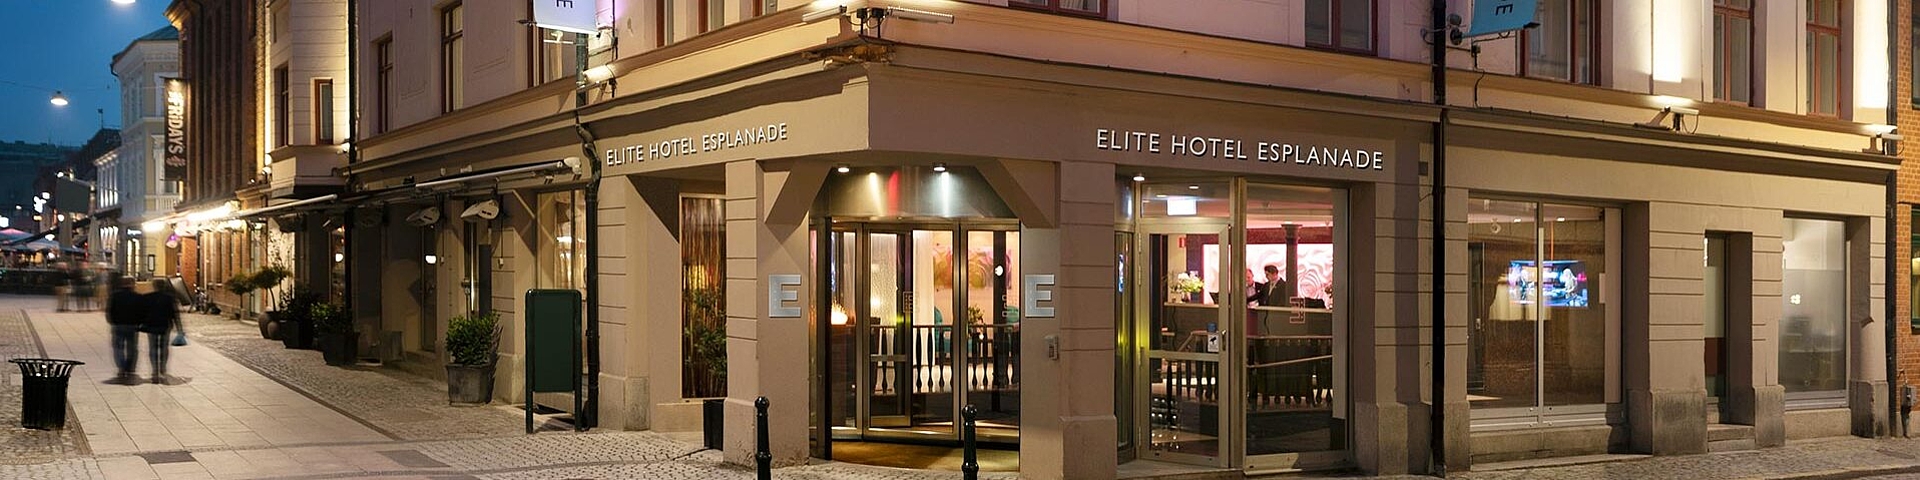 Elite Hotel Esplanade | Golf i Malmö